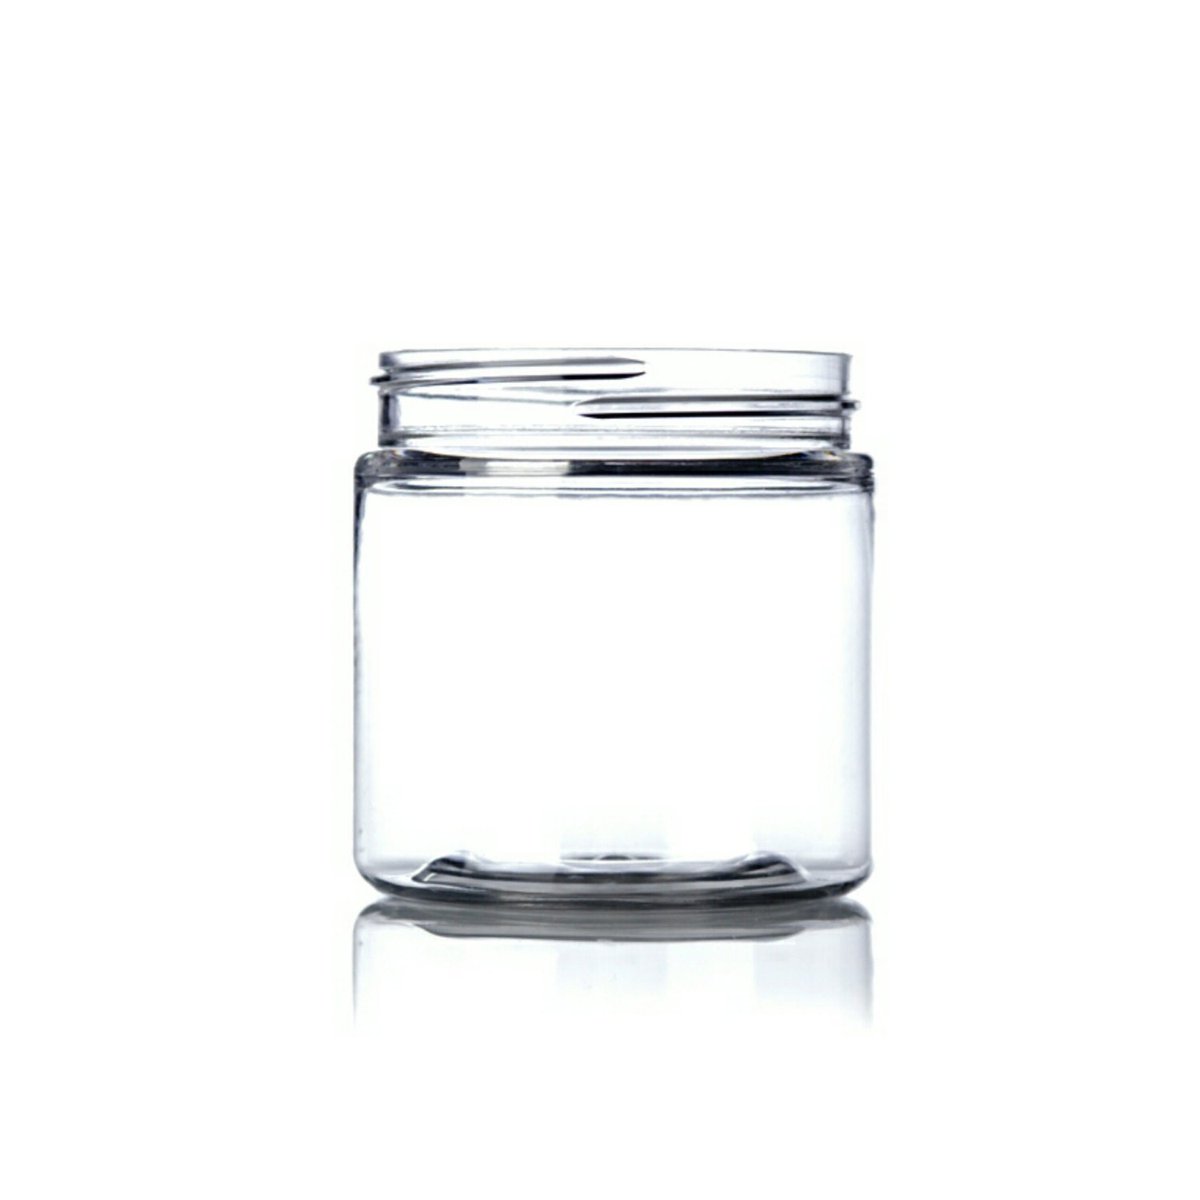 4oz Clear PET Single Wall Plastic Jars - Set of 25 - Bulk25 tuppu.net/8c090cfe #beautysupply #skincare #cosmetics #handmade #etsyseller #trending #explorepage #bottles #blackownedbusiness #ClearJars